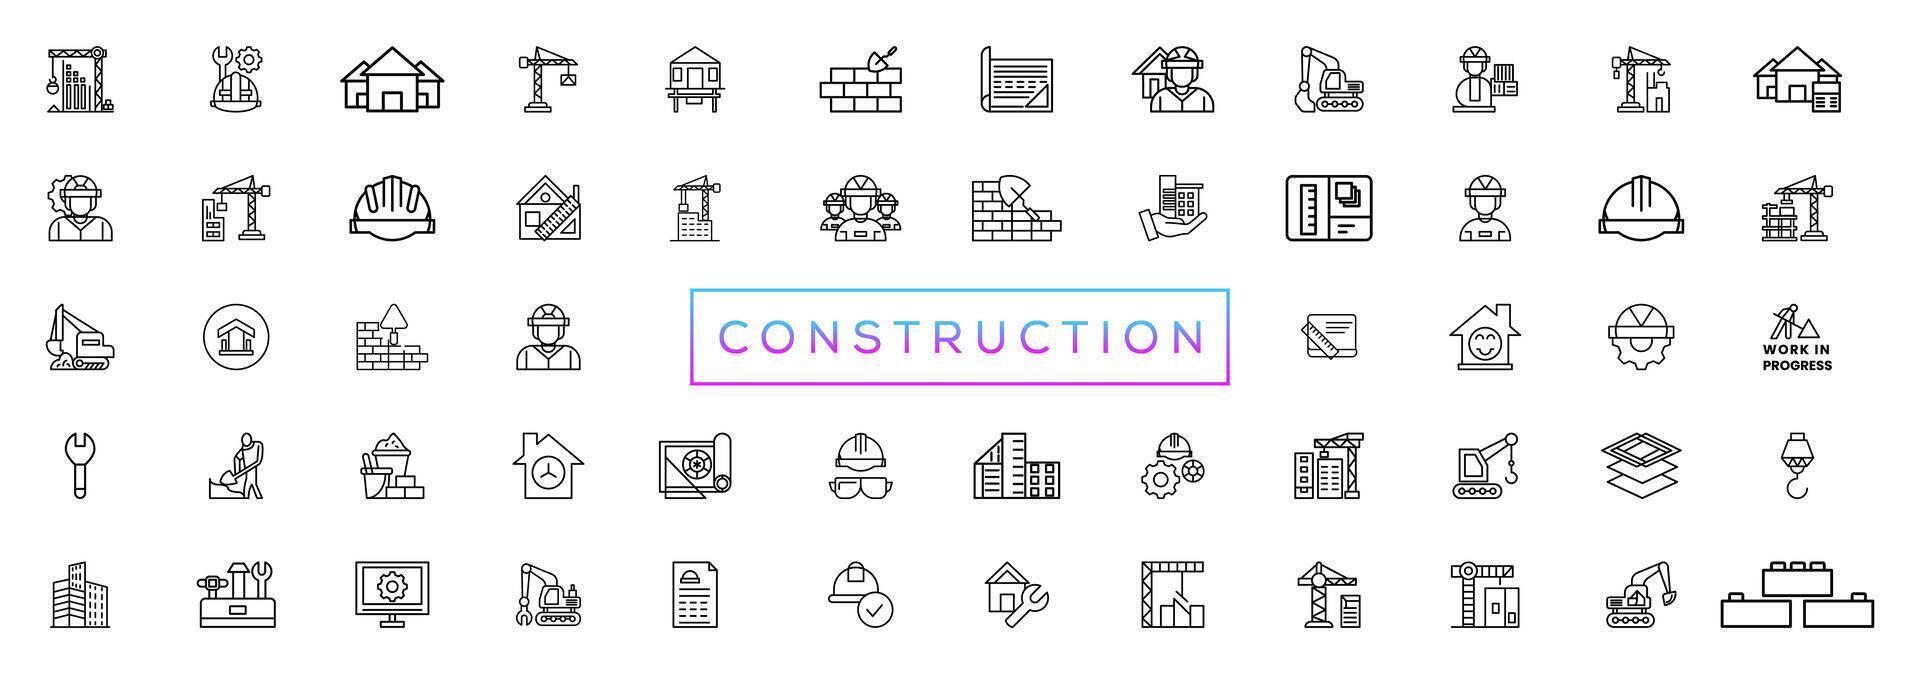 Construction line icons set. Home repair tools outline icons collection. Construction tools, builders and equipment symbols. Builder, crane, engineering, equipment, helmet, tool, house vector